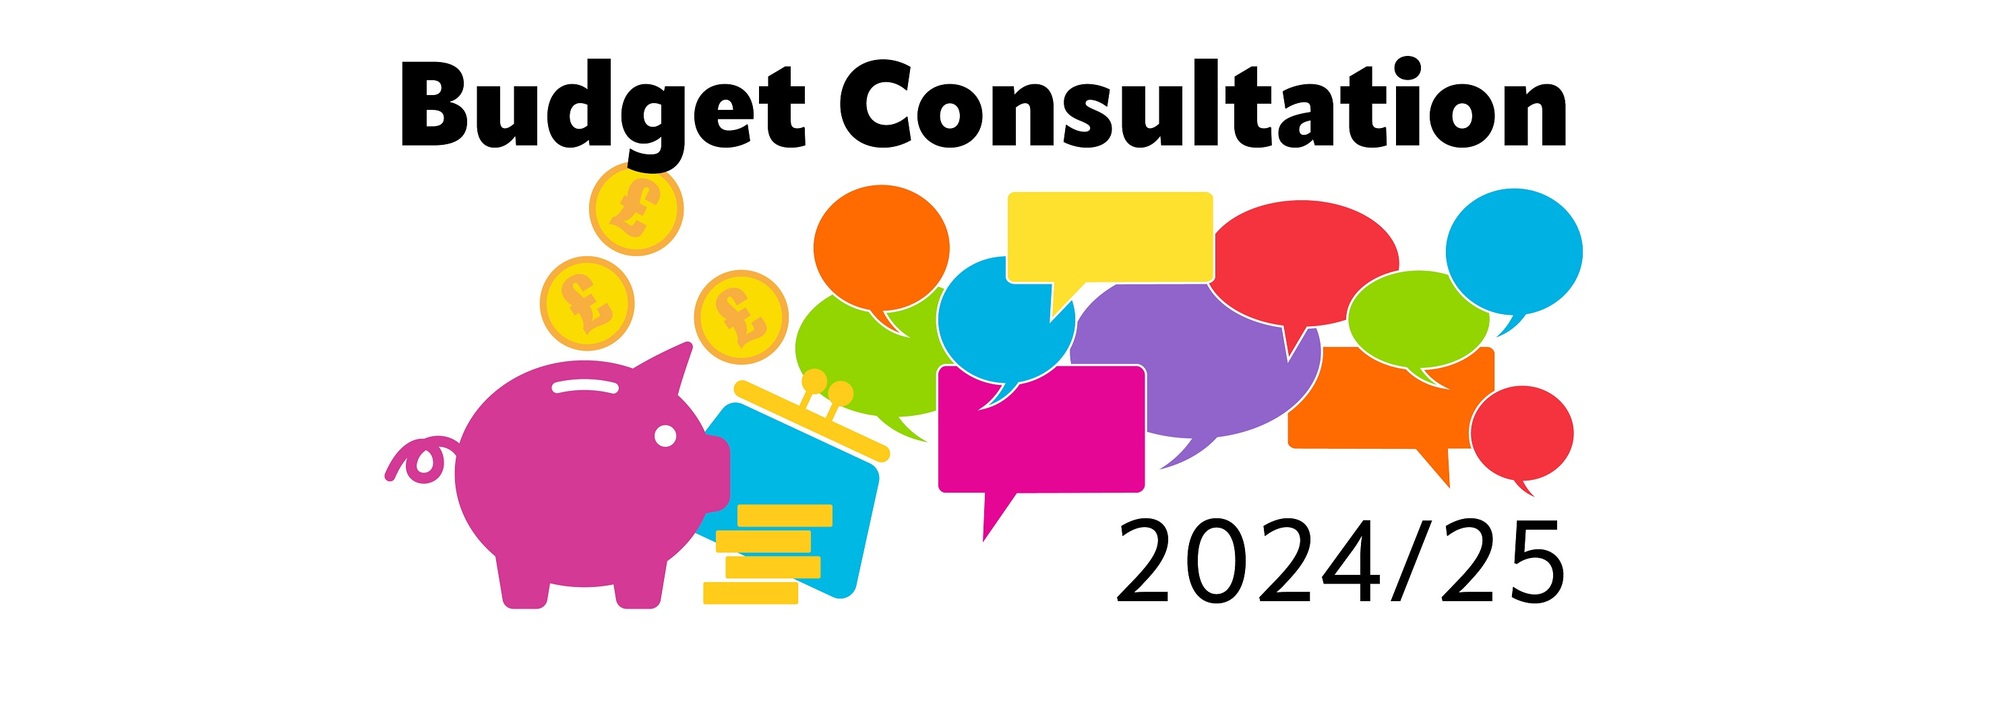 Budget Consultation events